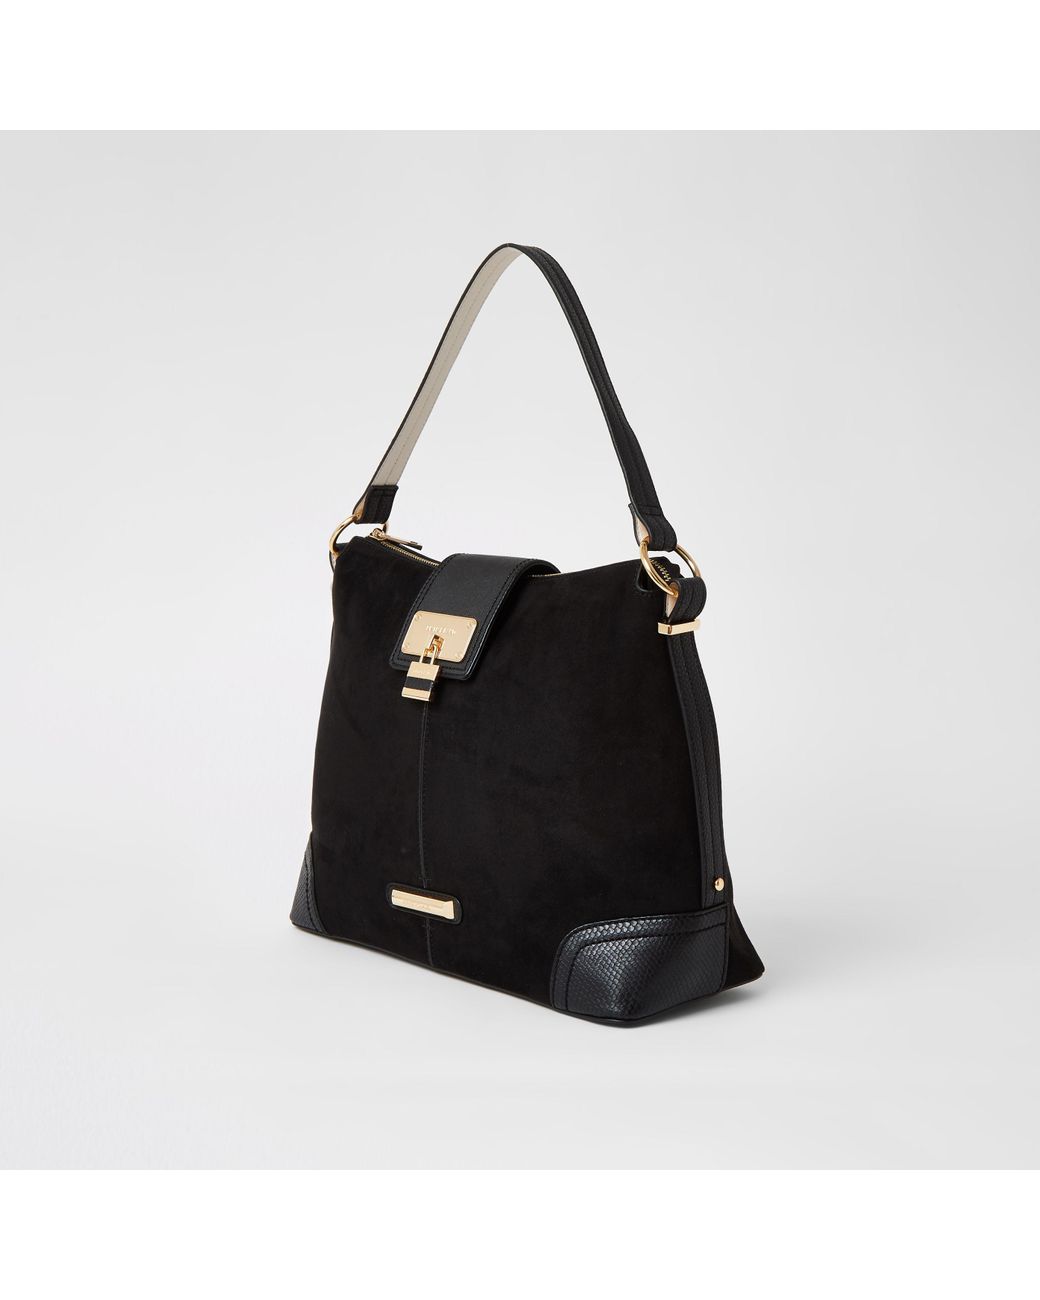 Black faux suede slouch handbag